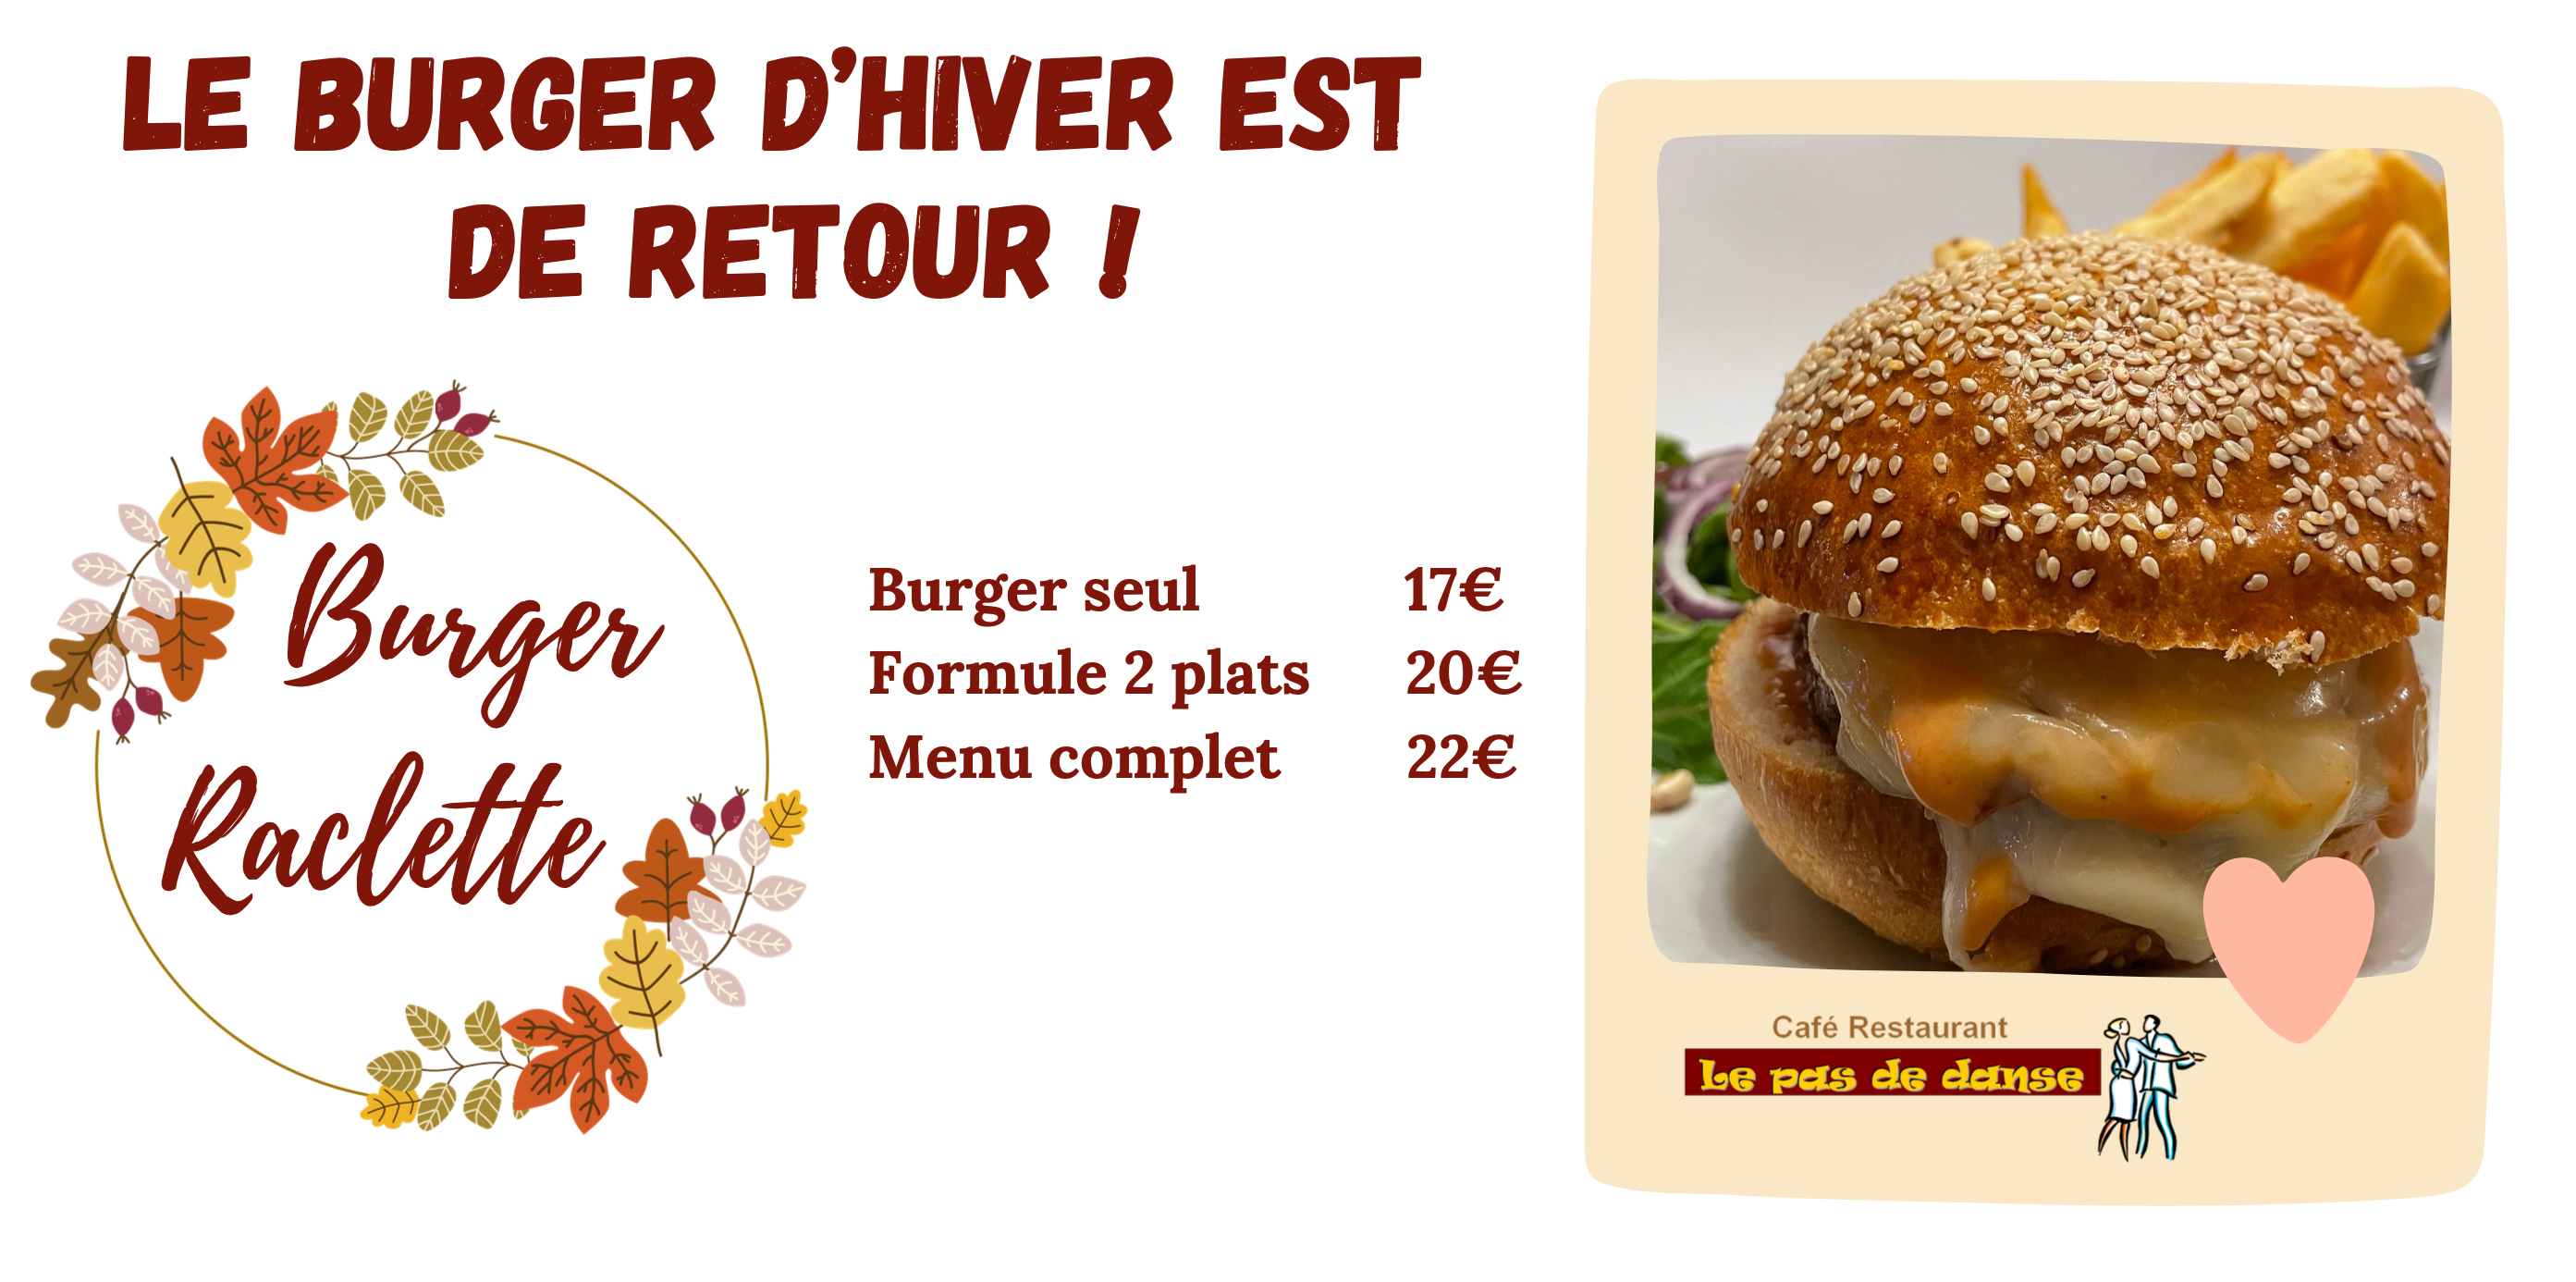 Burger seul 17€, Formule deux plats 20€, Menu complet 22€